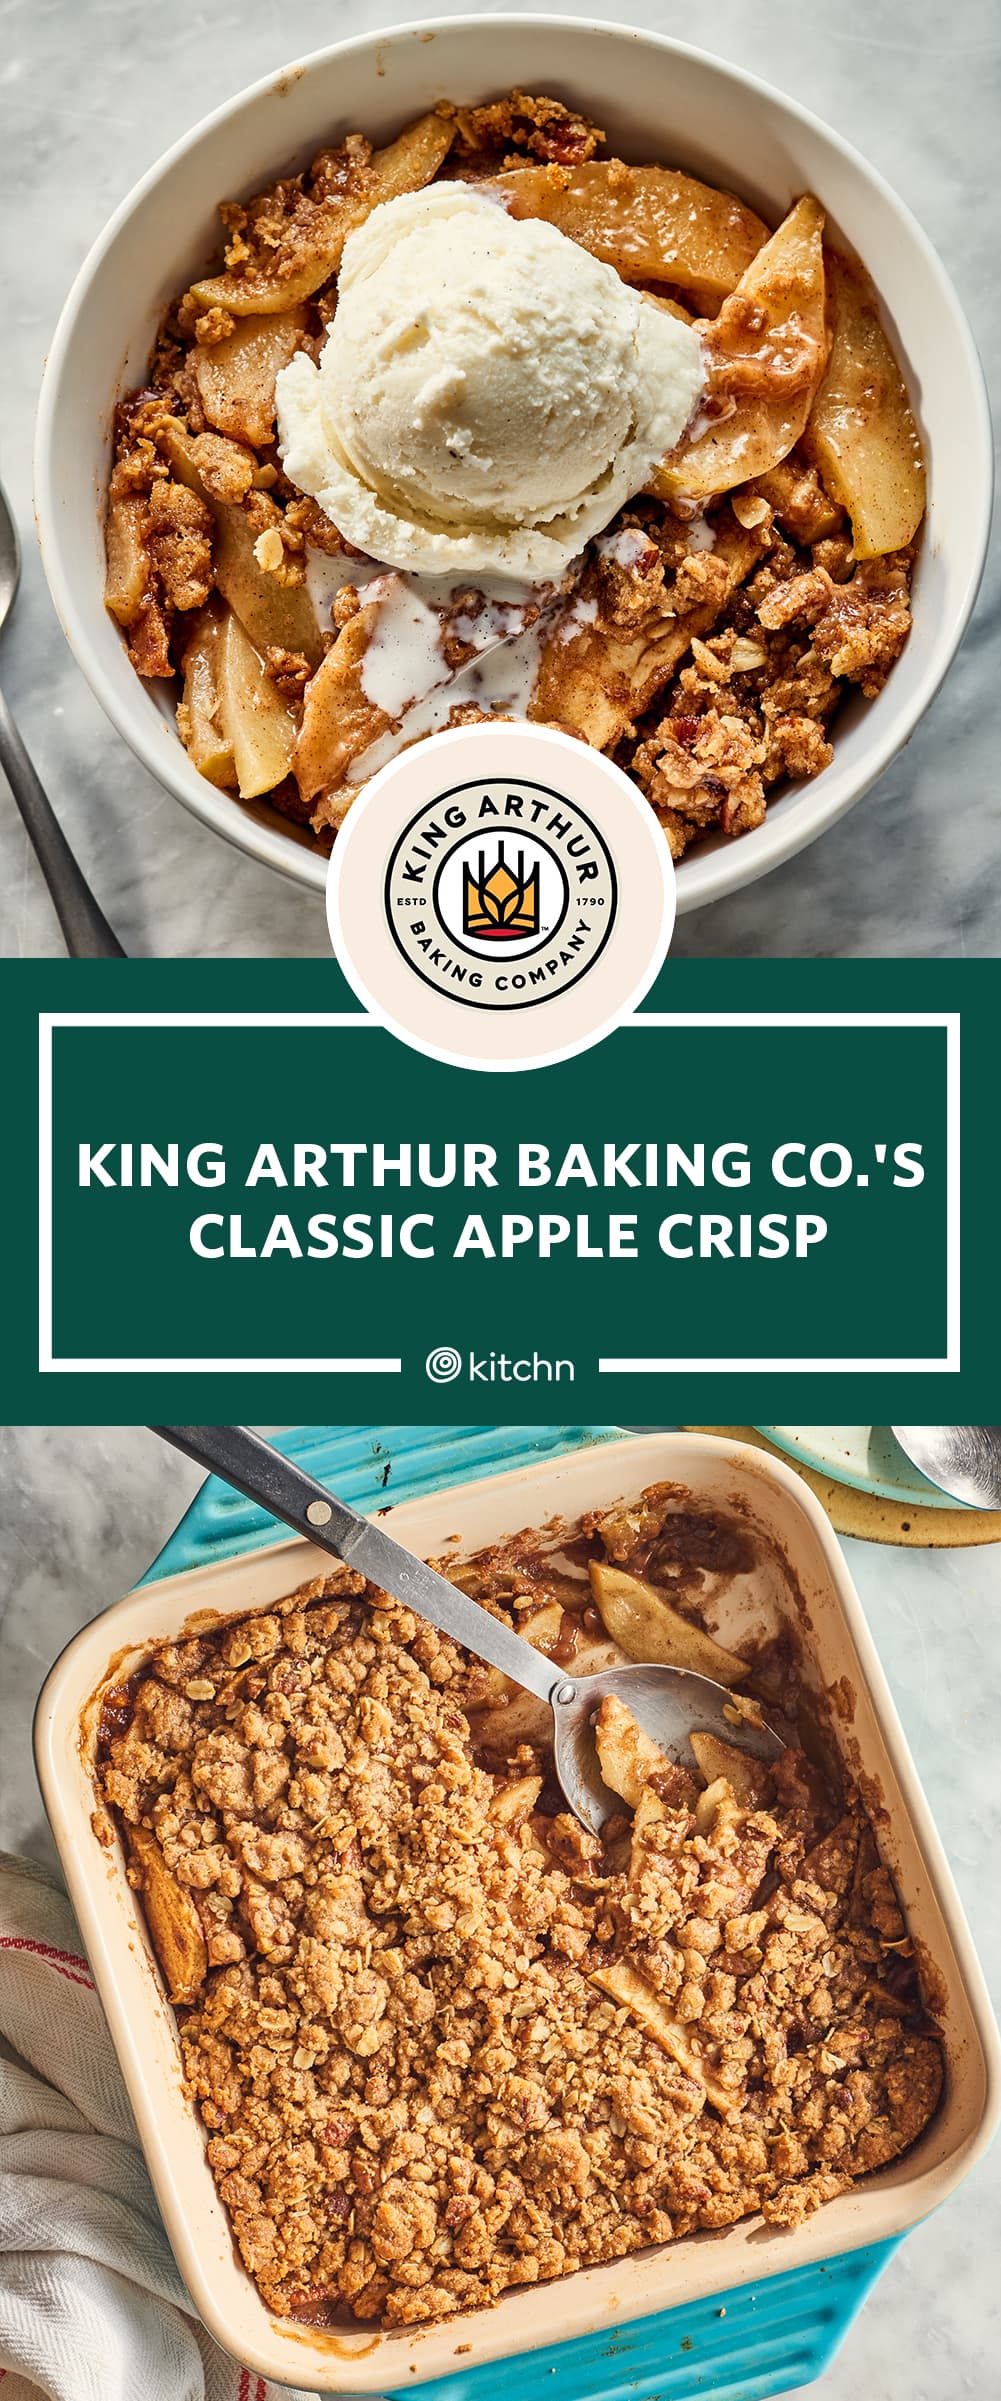 I Tried King Arthur Baking Company's Classic Apple Crisp Recipe